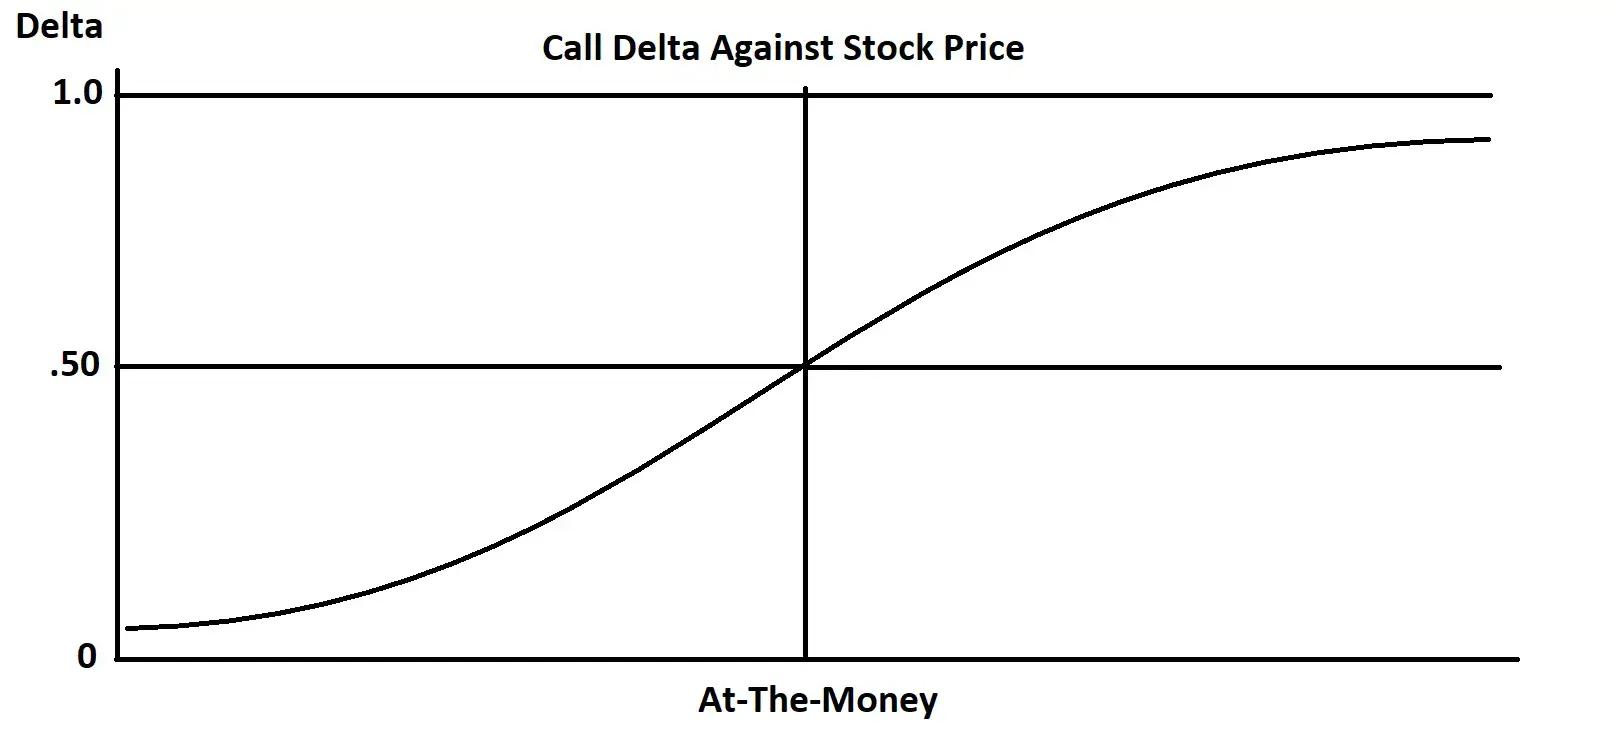 Delta-image